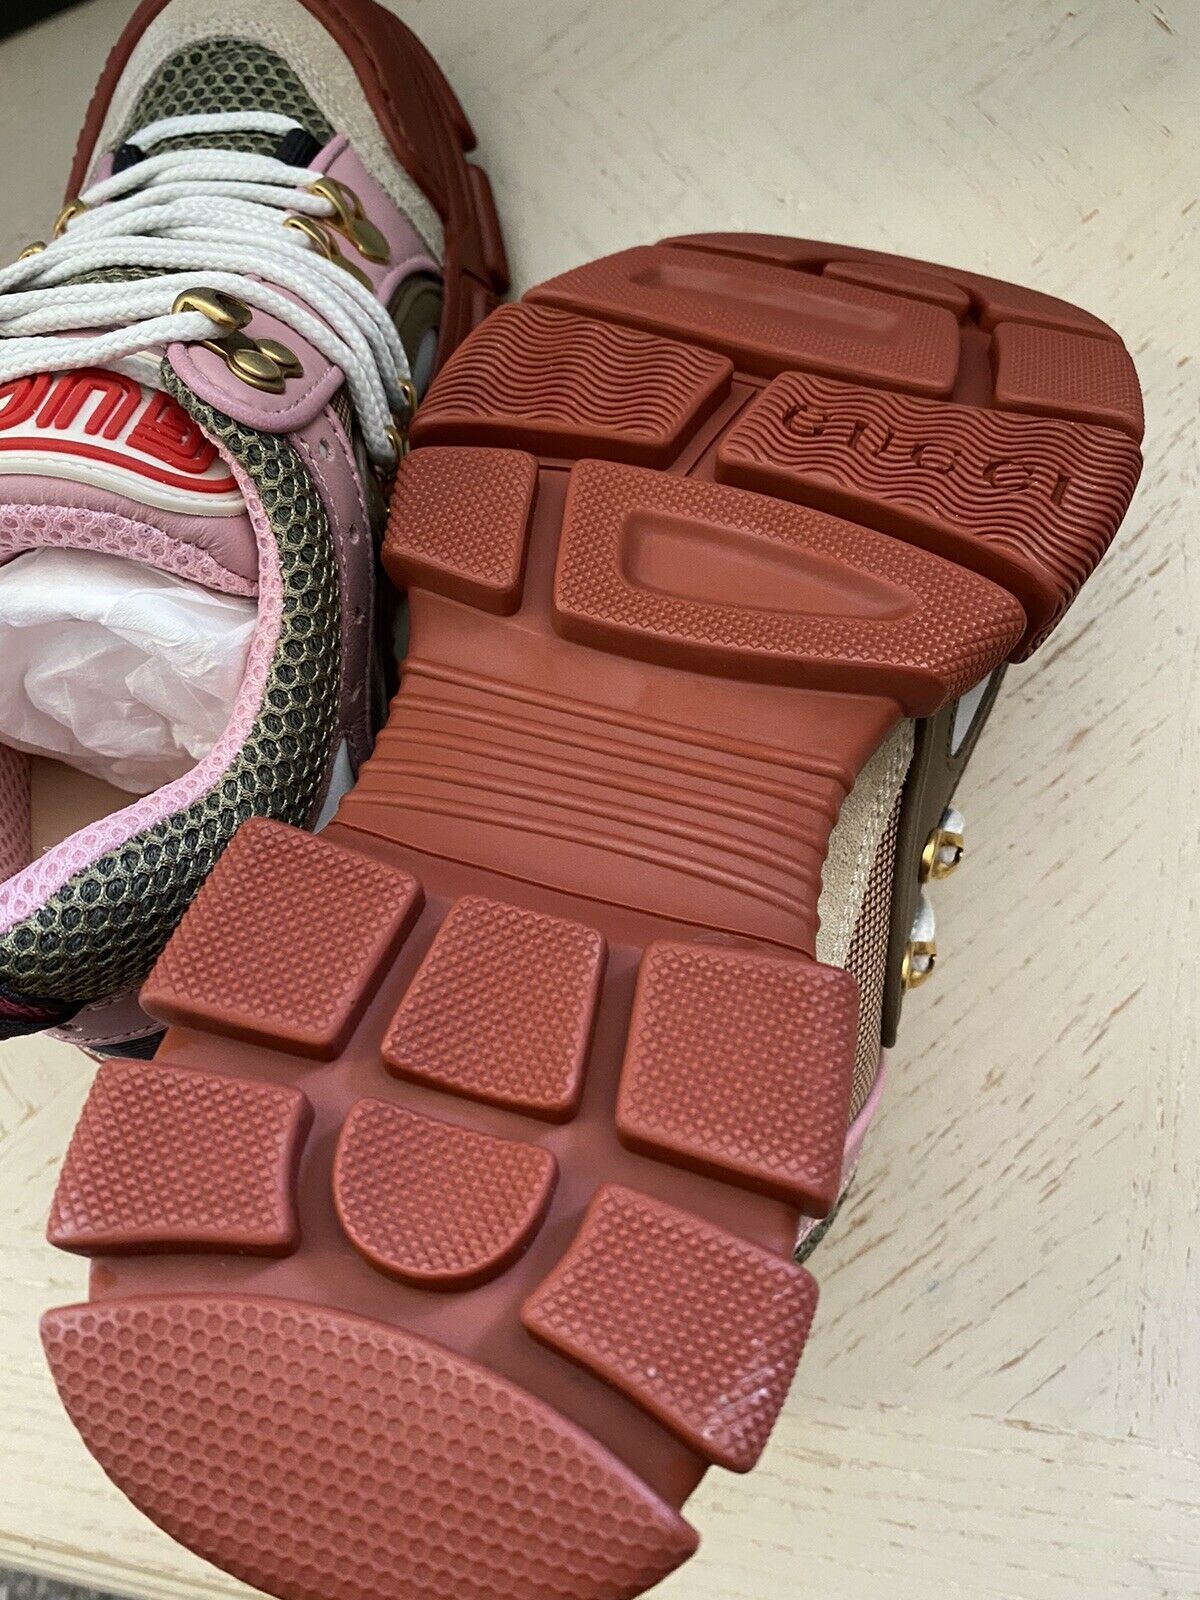 NIB $1300 Gucci Women’s Sneakers Shoes Military Green/Red/Pink 4 US/34 Eu